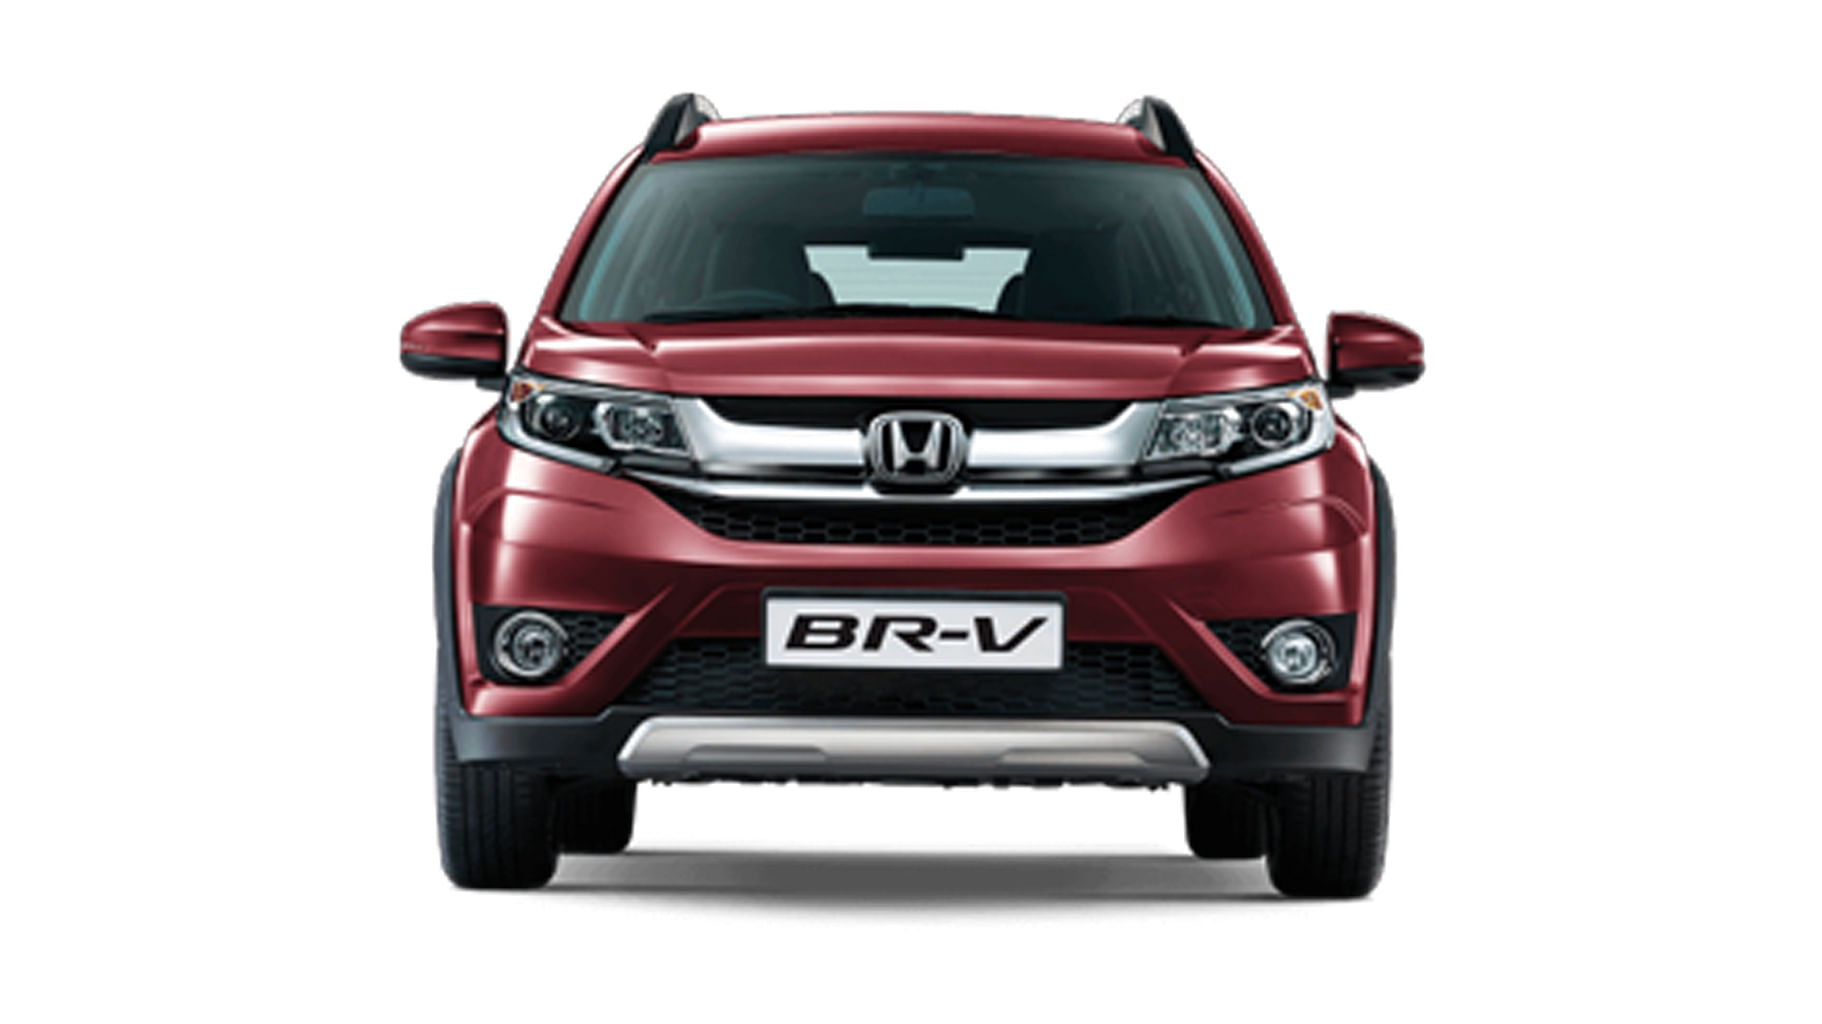 Honda BR-V. (Photo Courtesy: <a href="https://www.hondacarindia.com/brv/#gallery">Honda Cars India</a>)